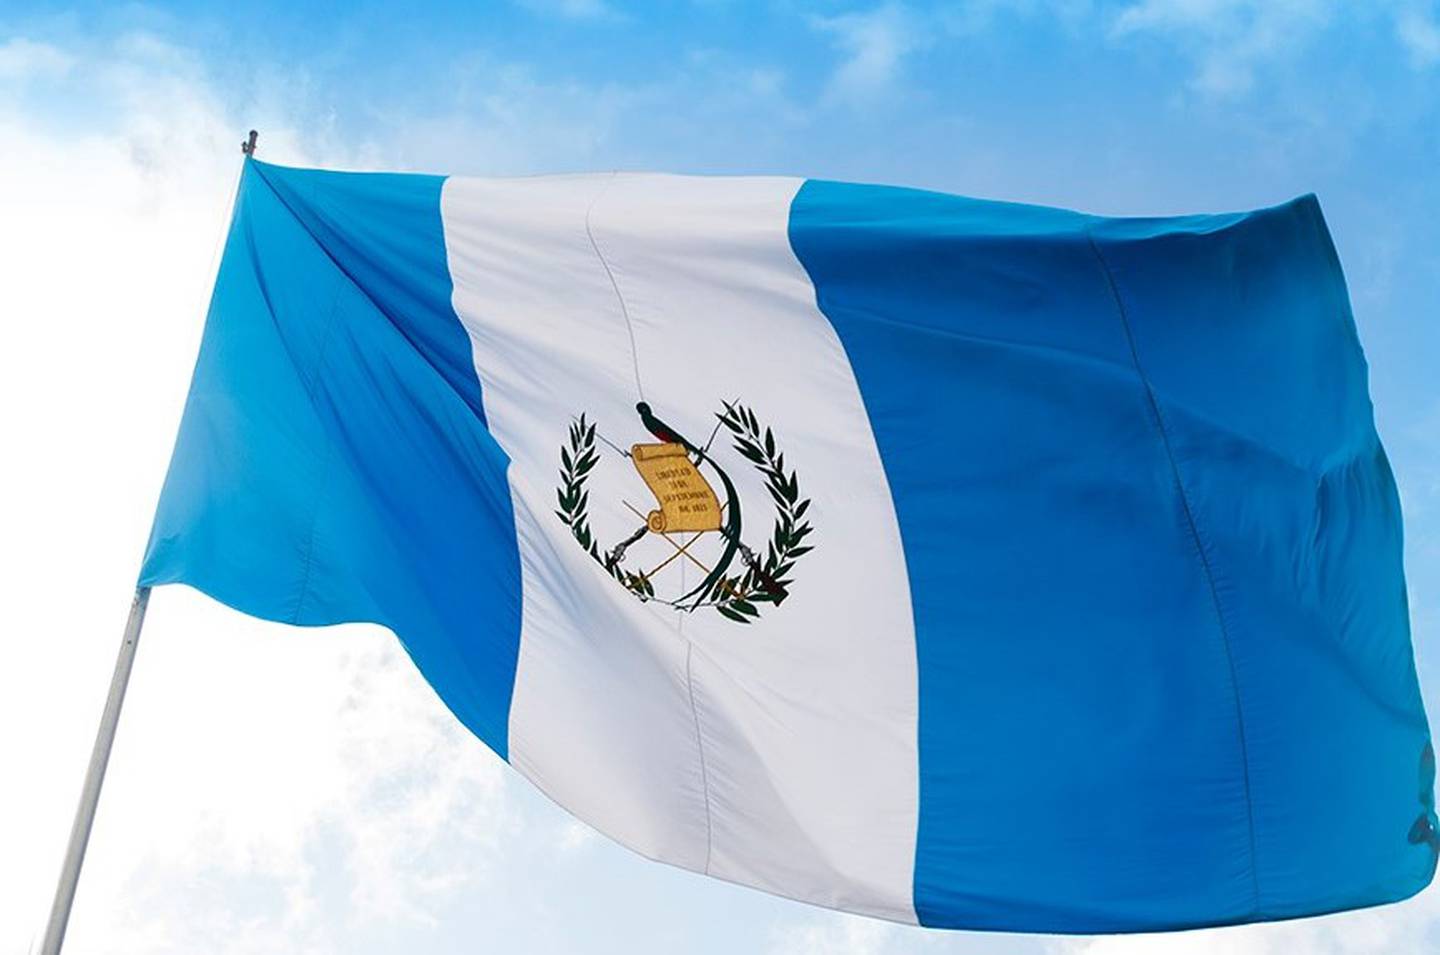 La bandera de Guatemala.